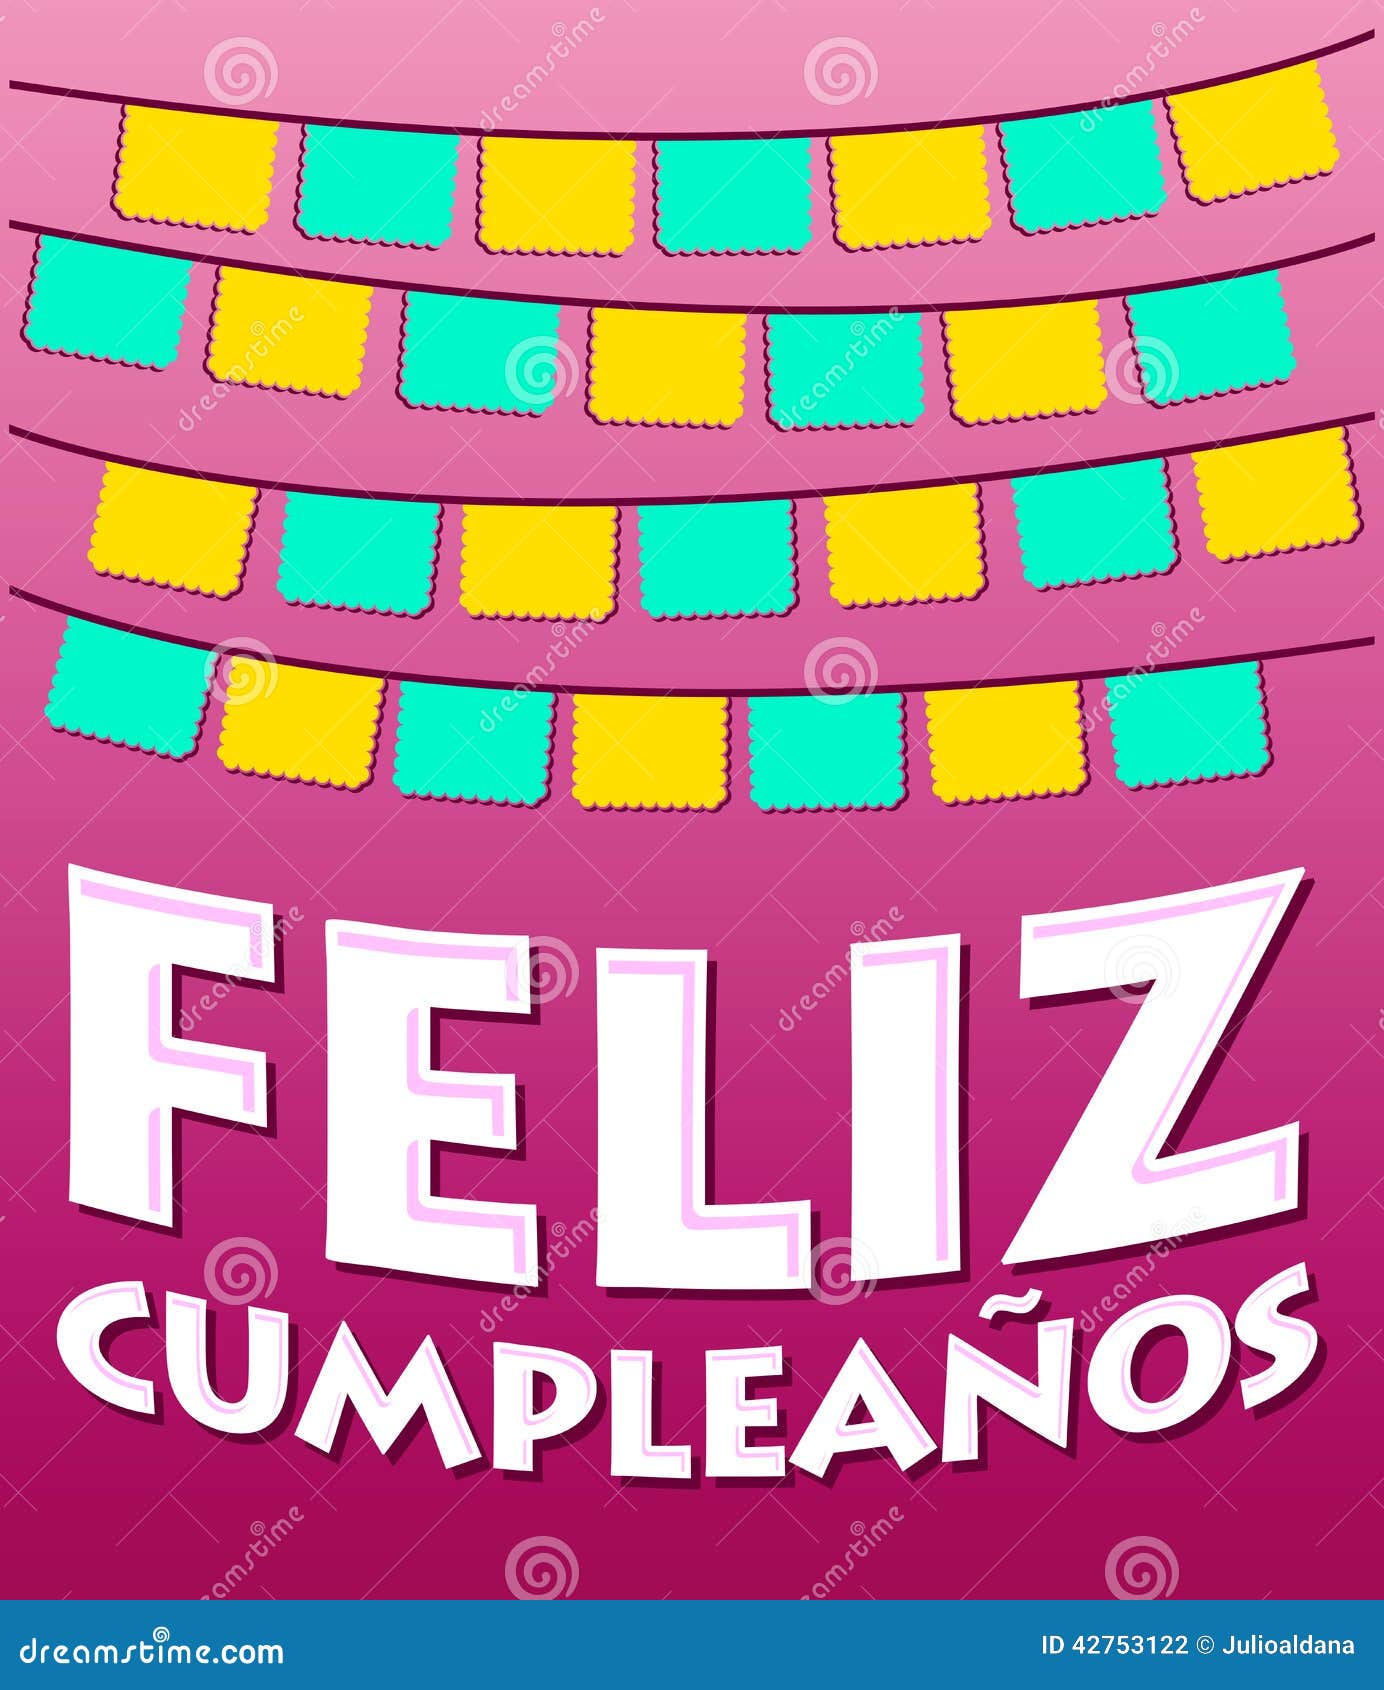 feliz cumpleanos - happy birthday spanish text